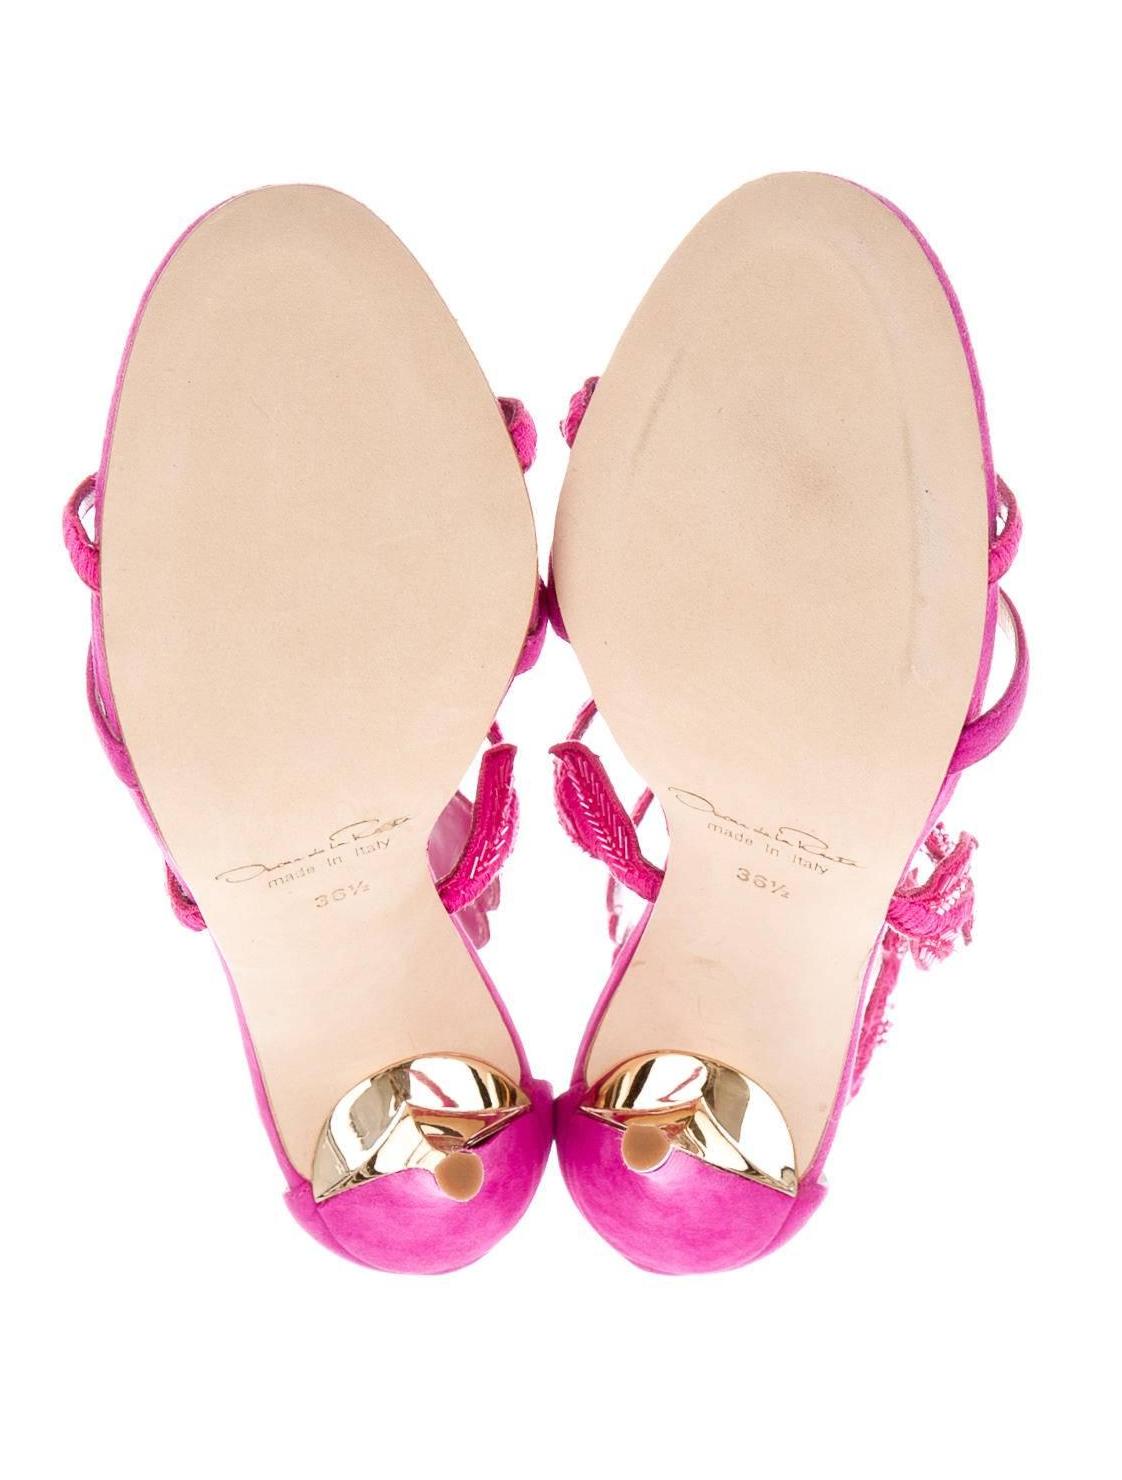 Oscar de la Rental NEW Pink Suede Bead Floral High Heels Sandals in Box 1